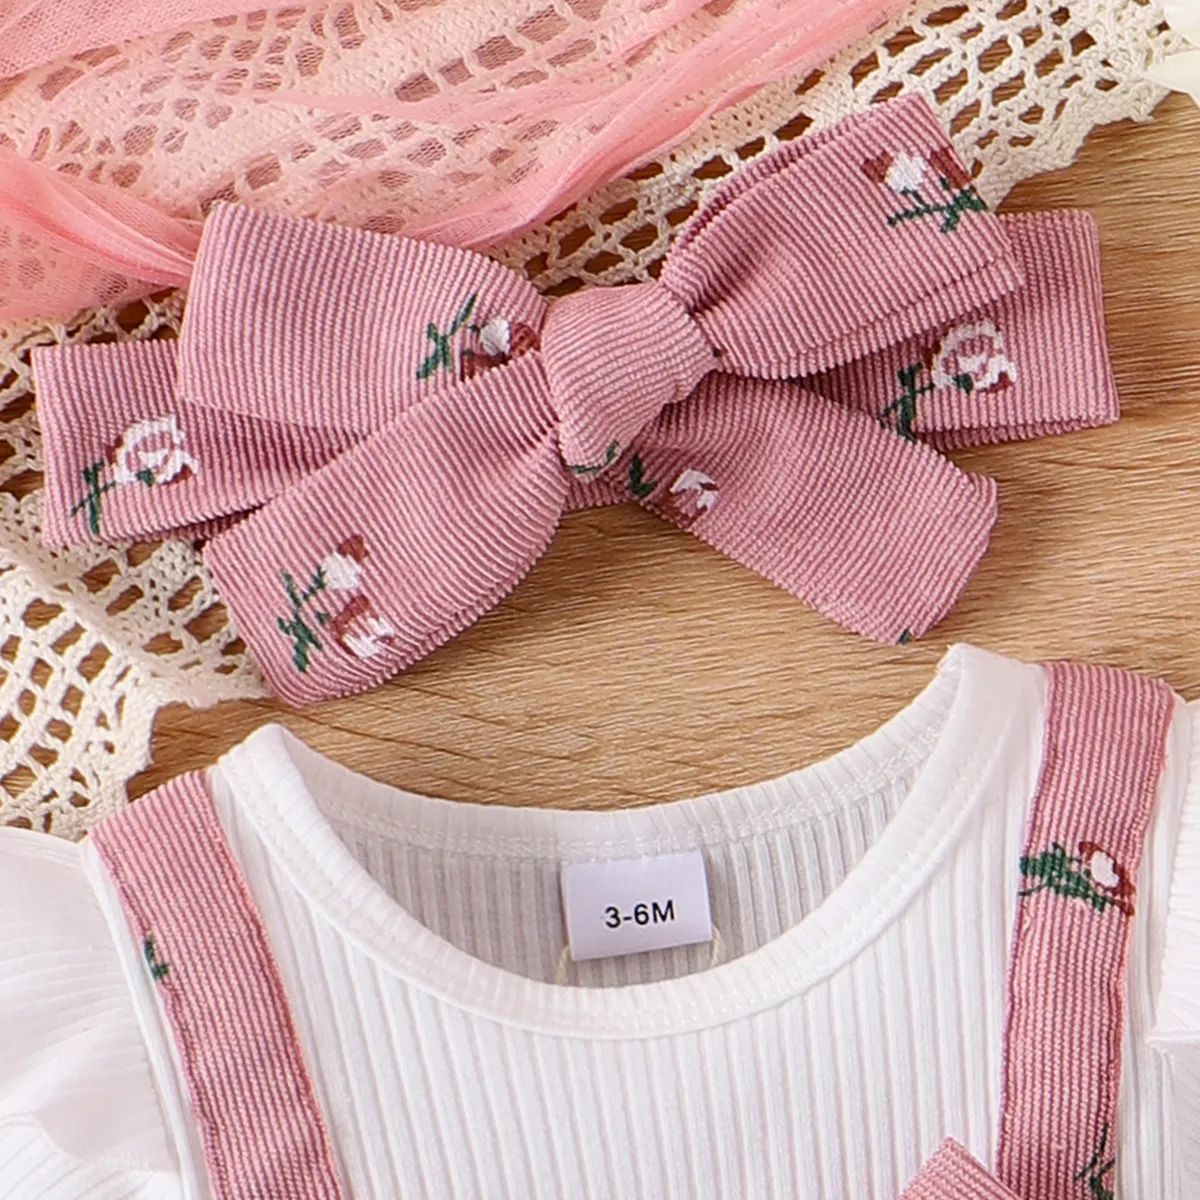  Baby Girls Sweet Dress with Flutter Sleeve and Broken Flower Pattern Pink big image 1